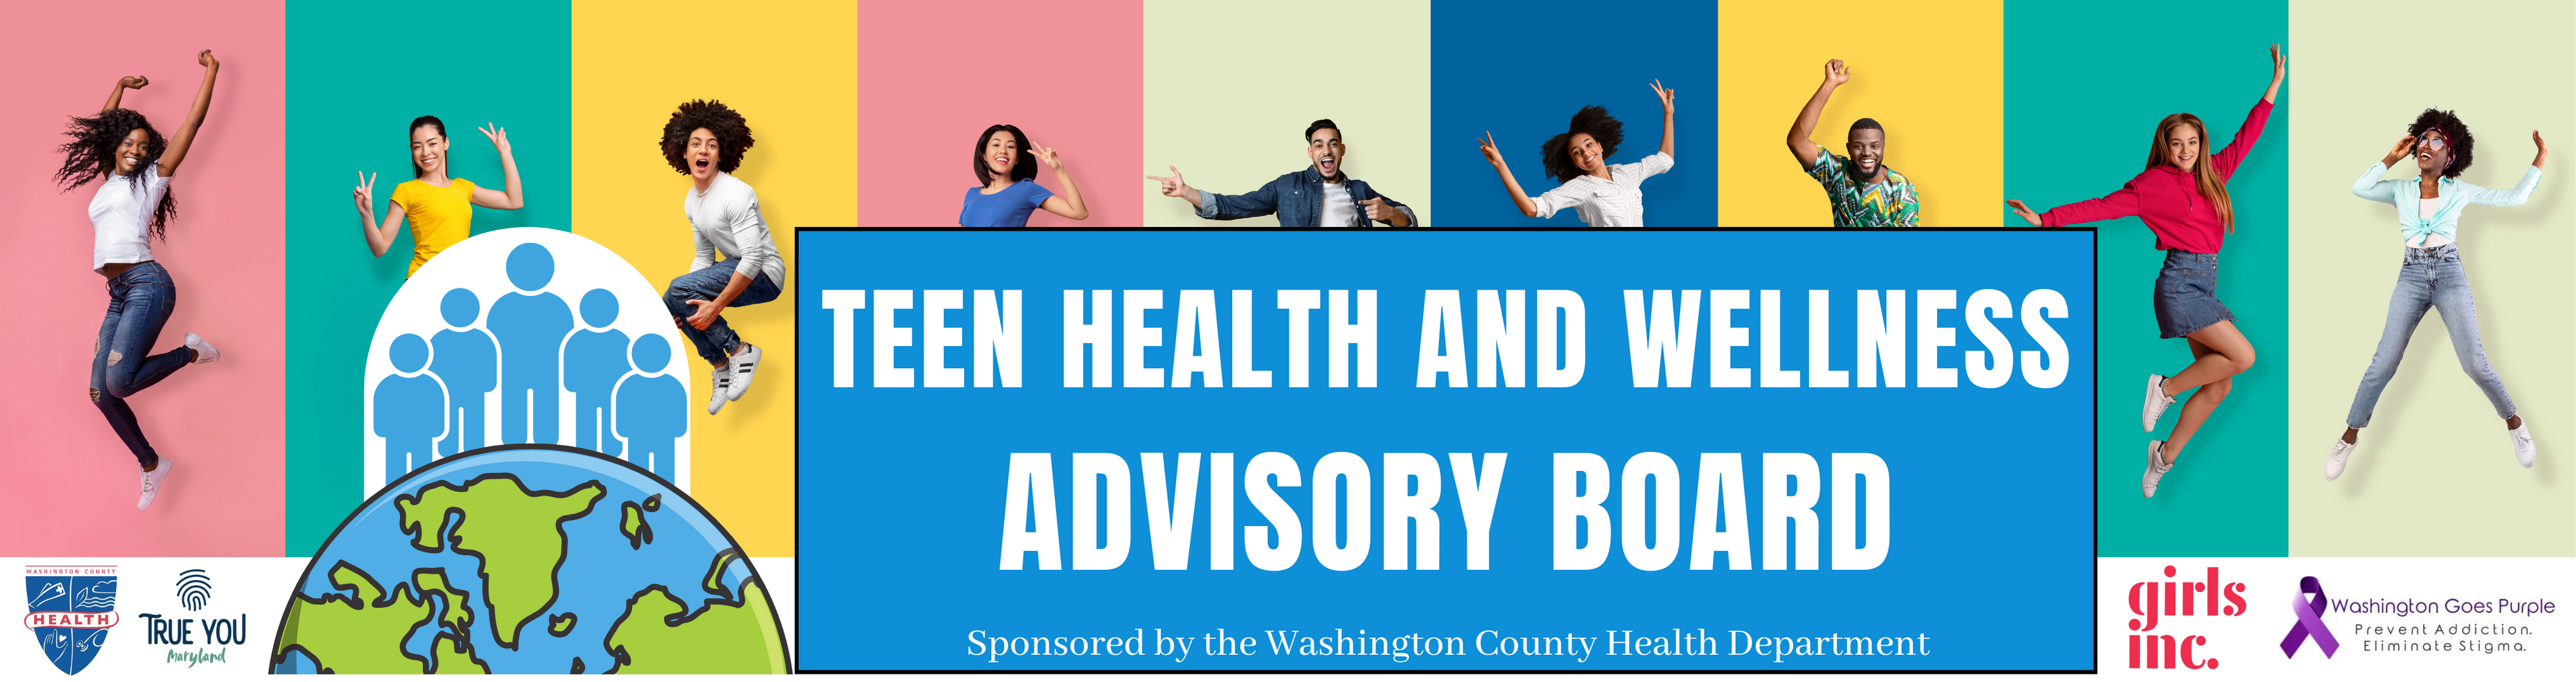 Washington County Teen Health and Wellness Advisory Board. Sponsored by the Washington County Health Department. 